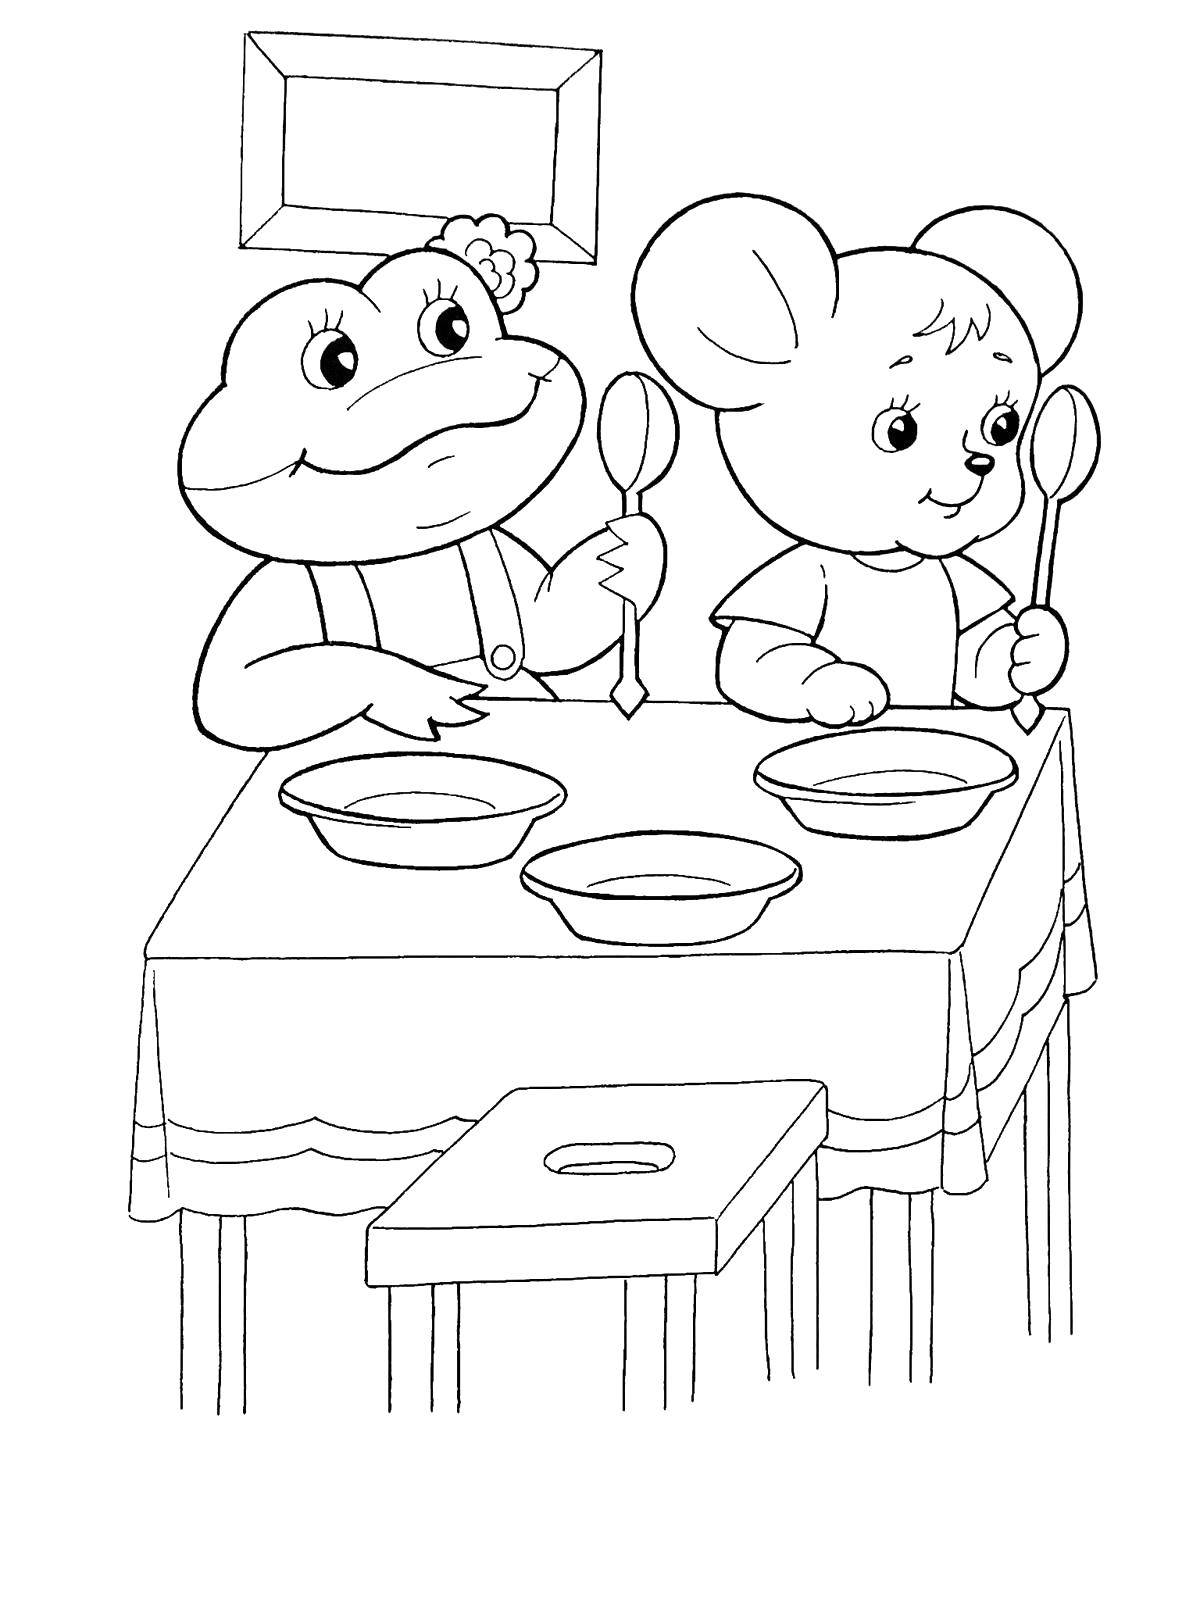 Название: Раскраска Лягушонок и мышонок ждут обеда. Категория: Раскраски для малышей. Теги: Лягушка, мышонок, обед.